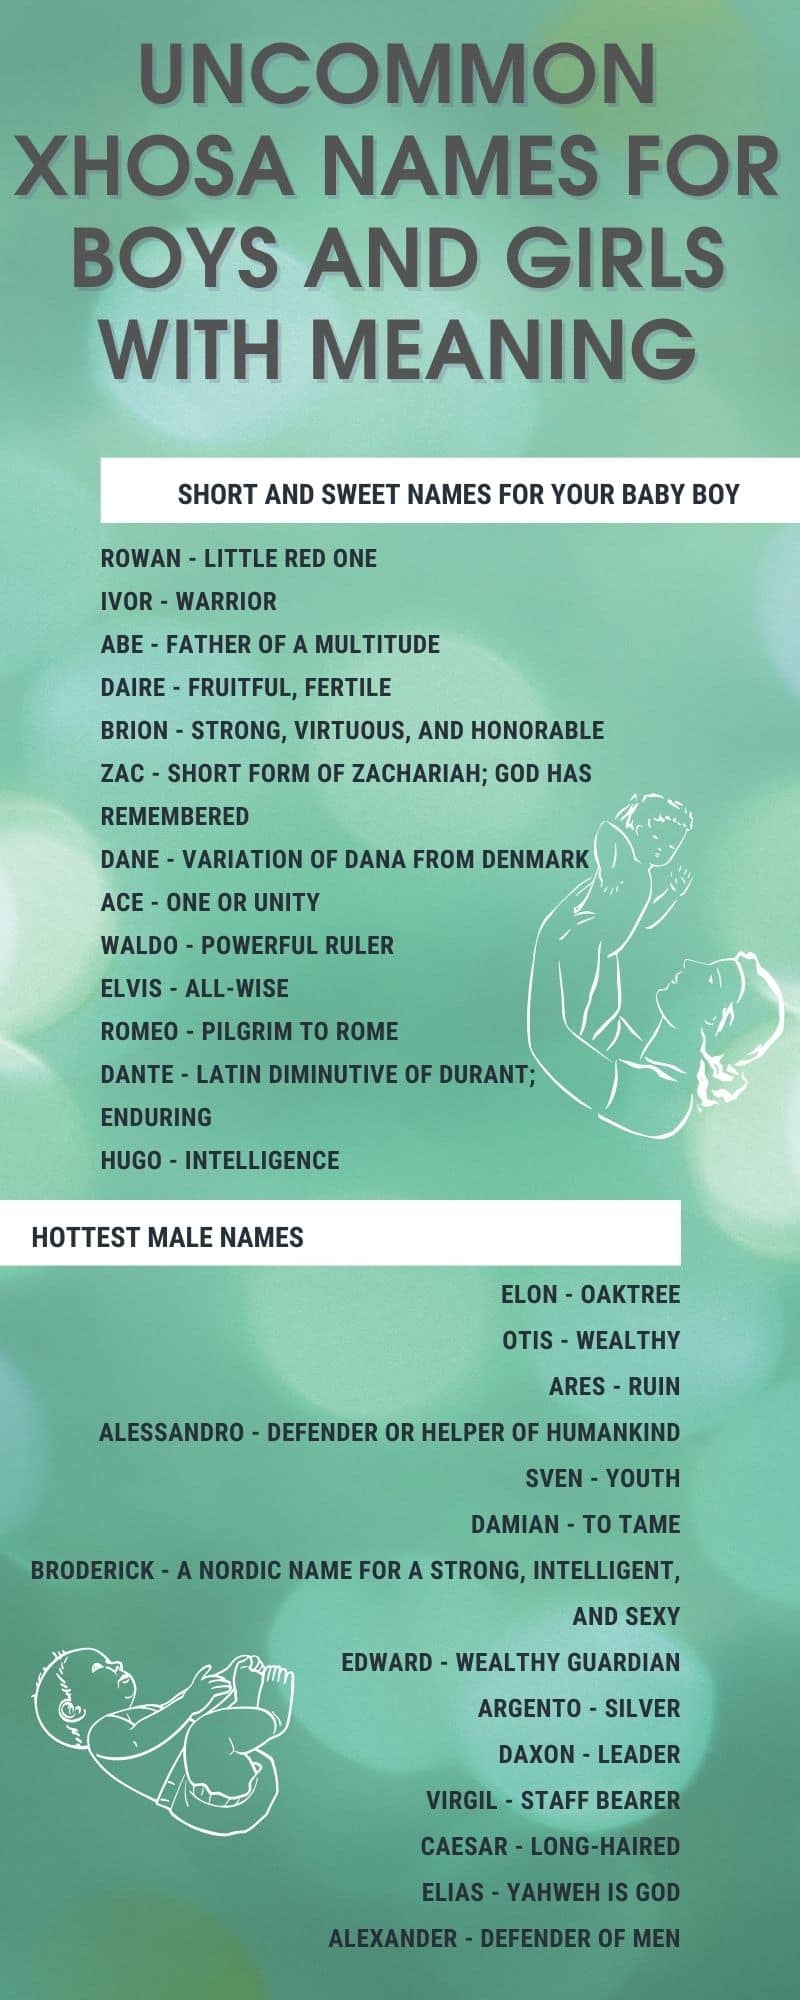 Top 10 hot guy names